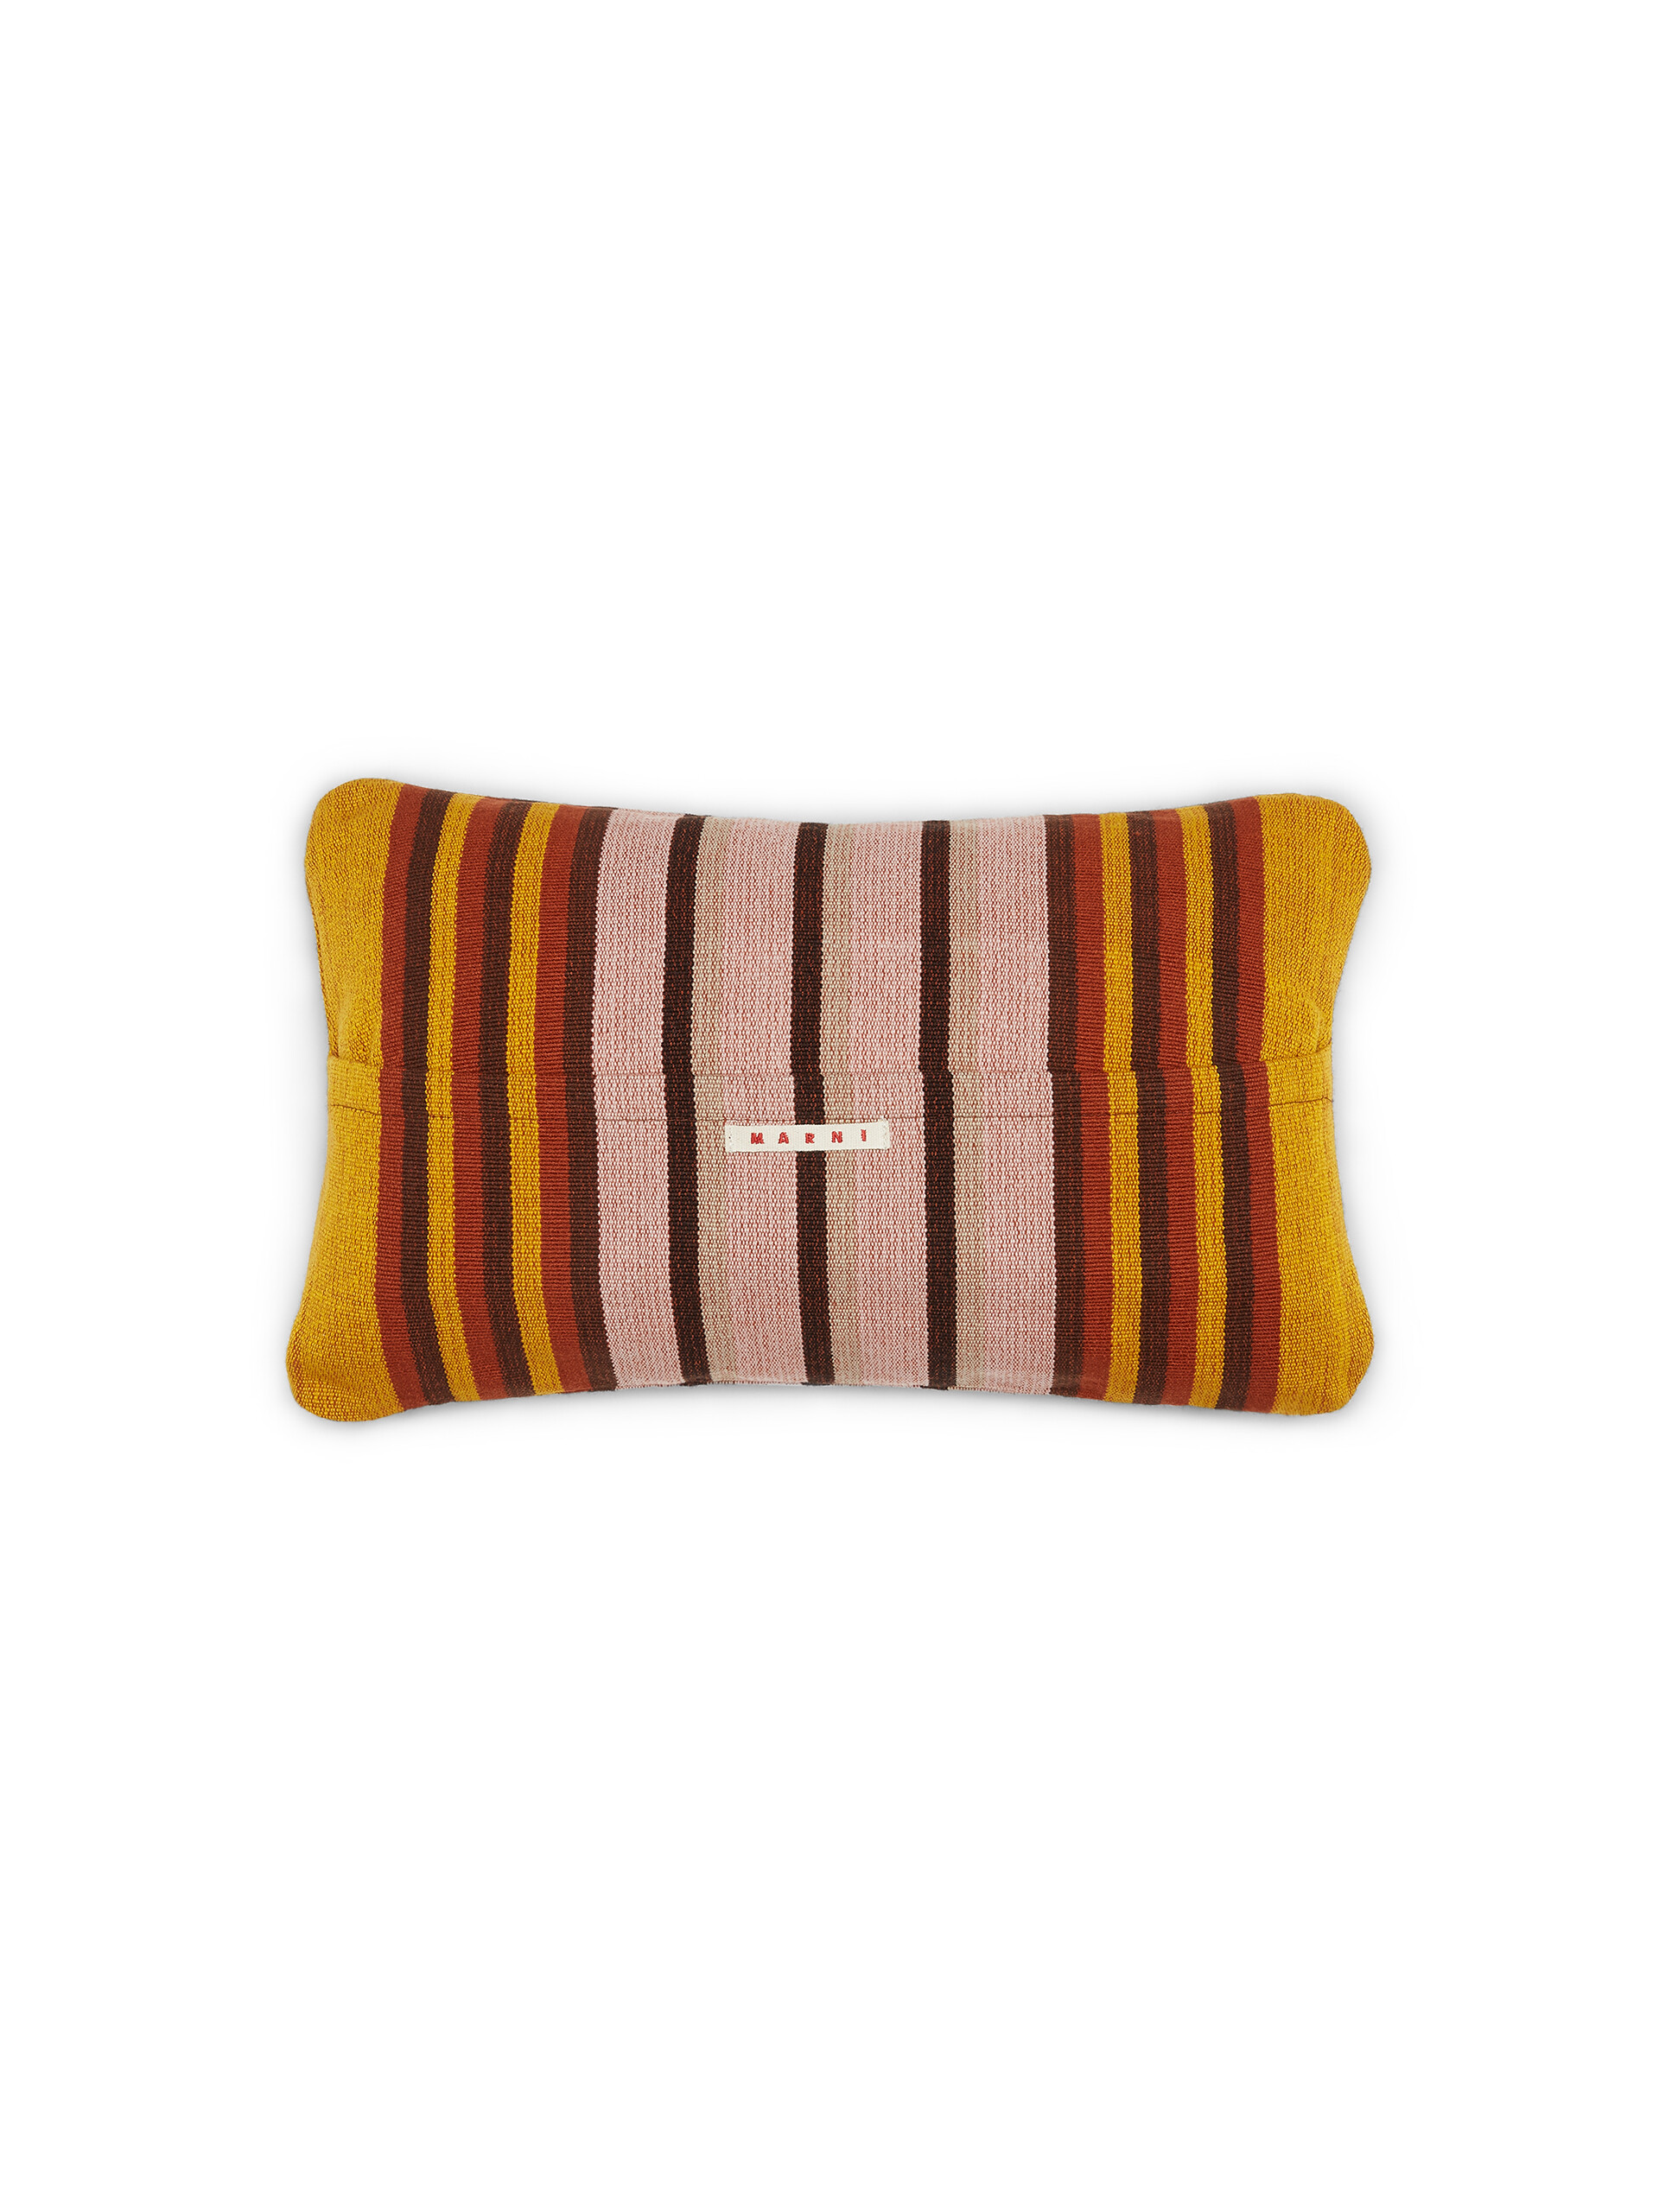 MARNI MARKET cushion in multicolor brown fabric - Furniture - Image 2